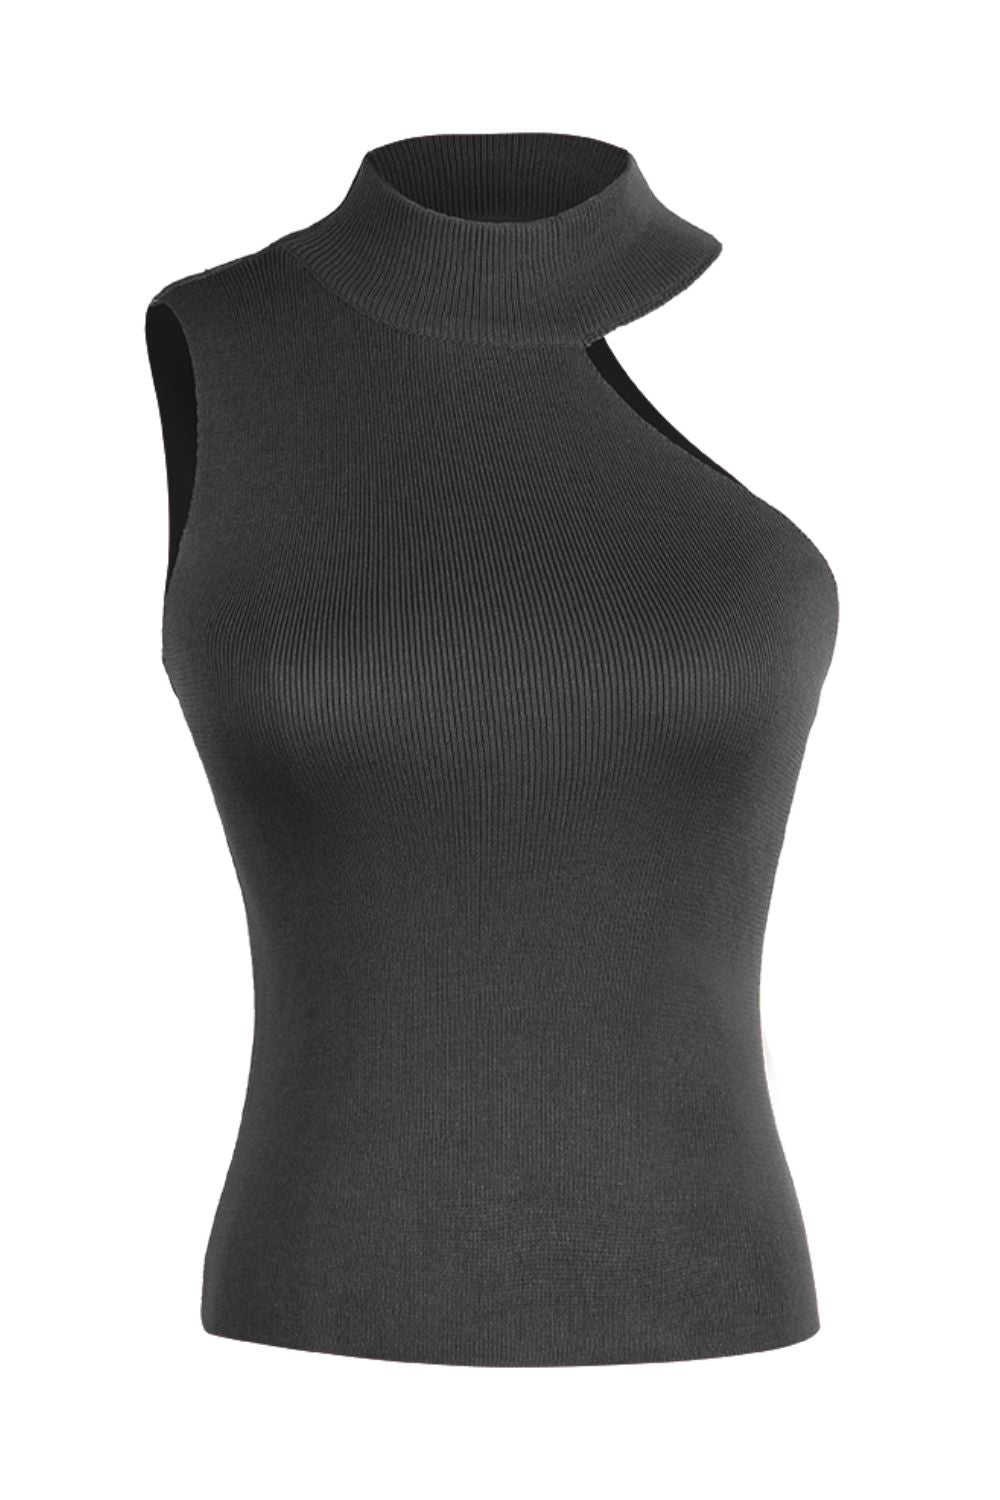 Asymmetrical Sleeveless Rib-Knit Top